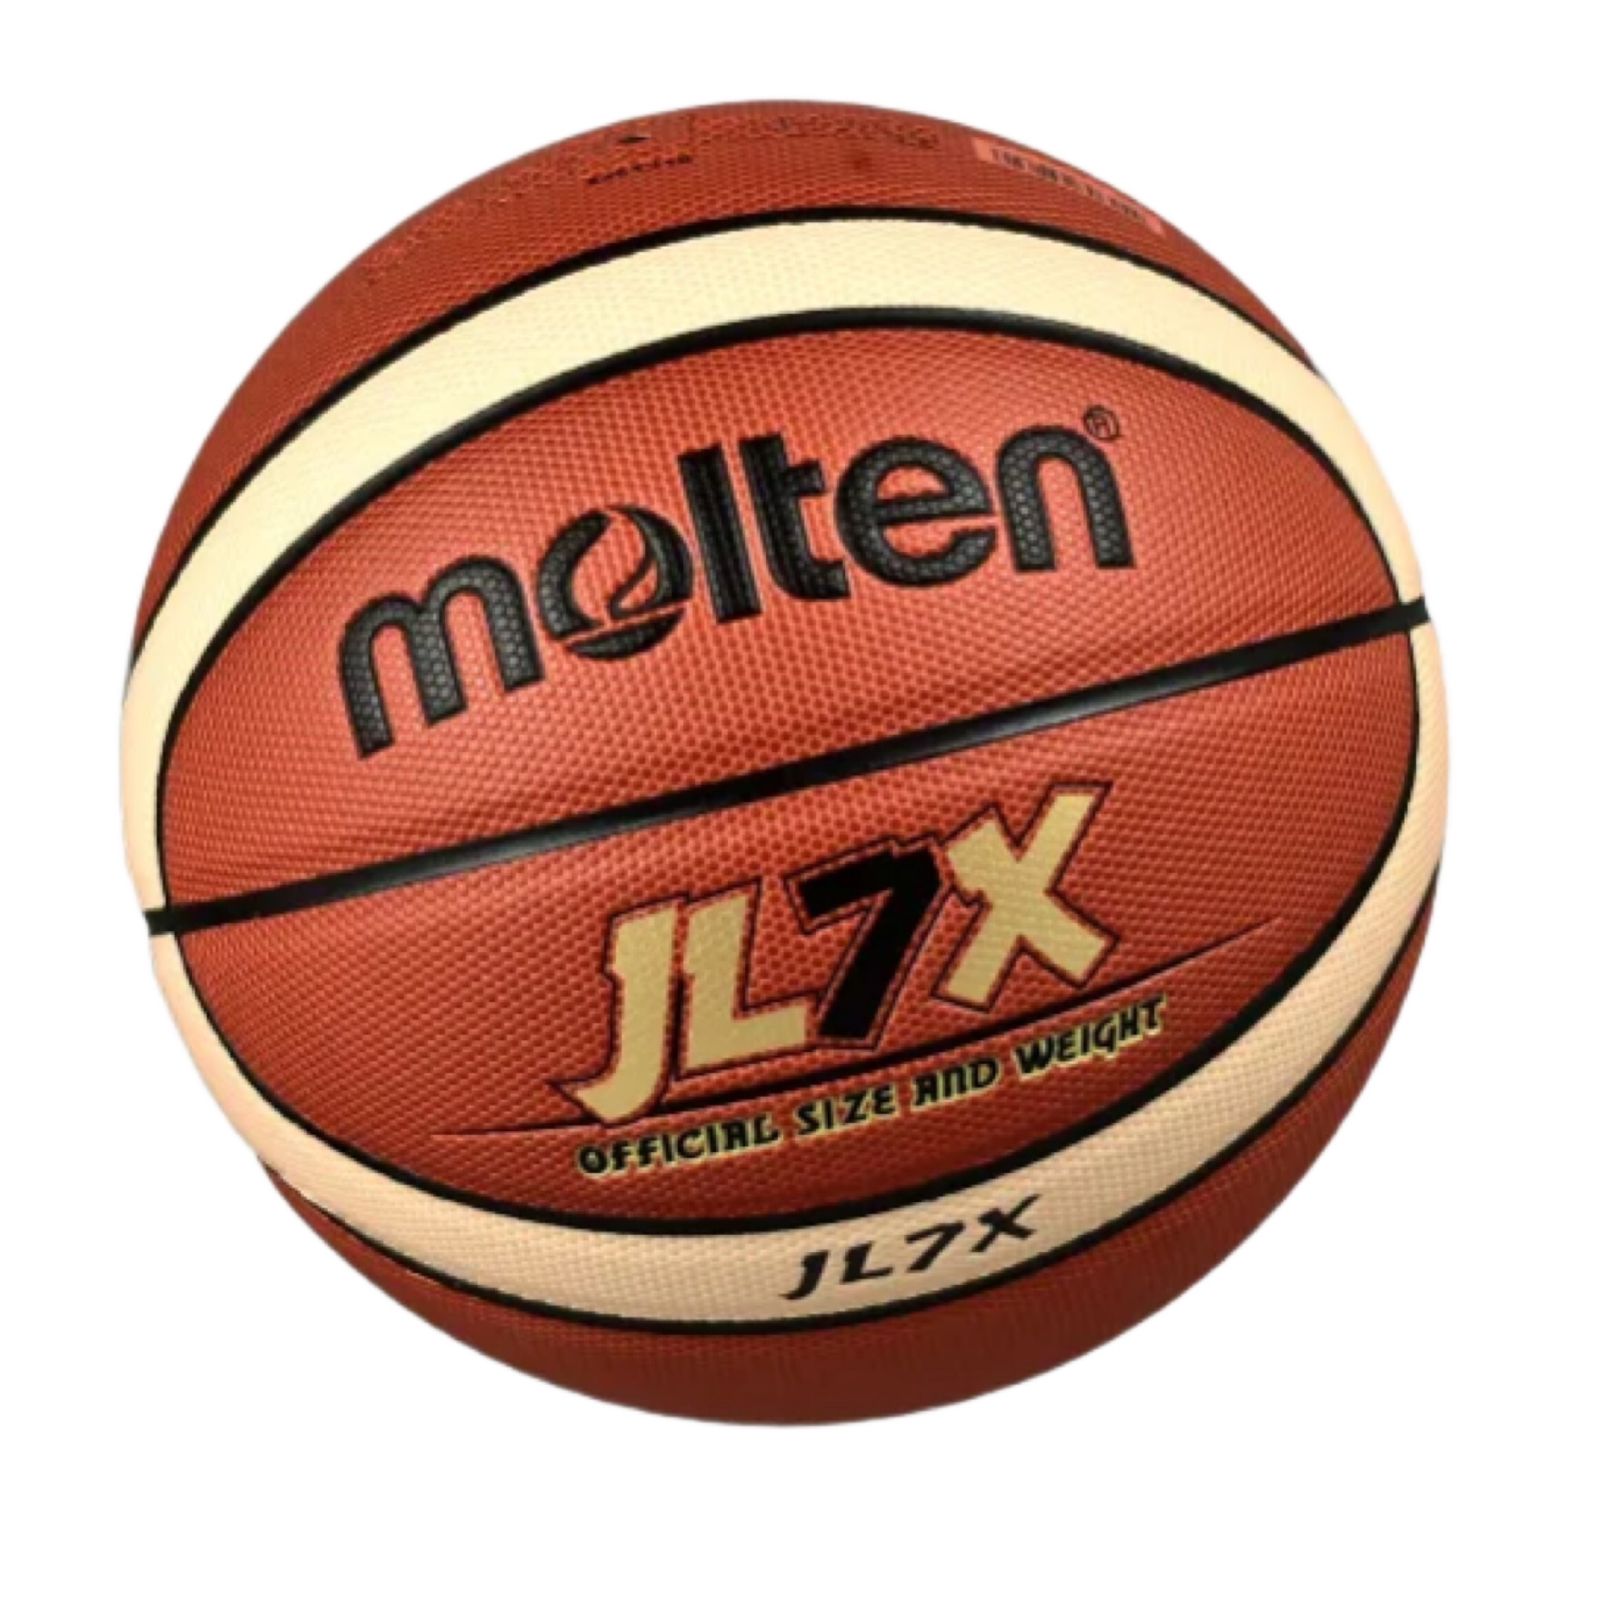 توپ بسکتبال مولتن مدل Jl7x -  - 1